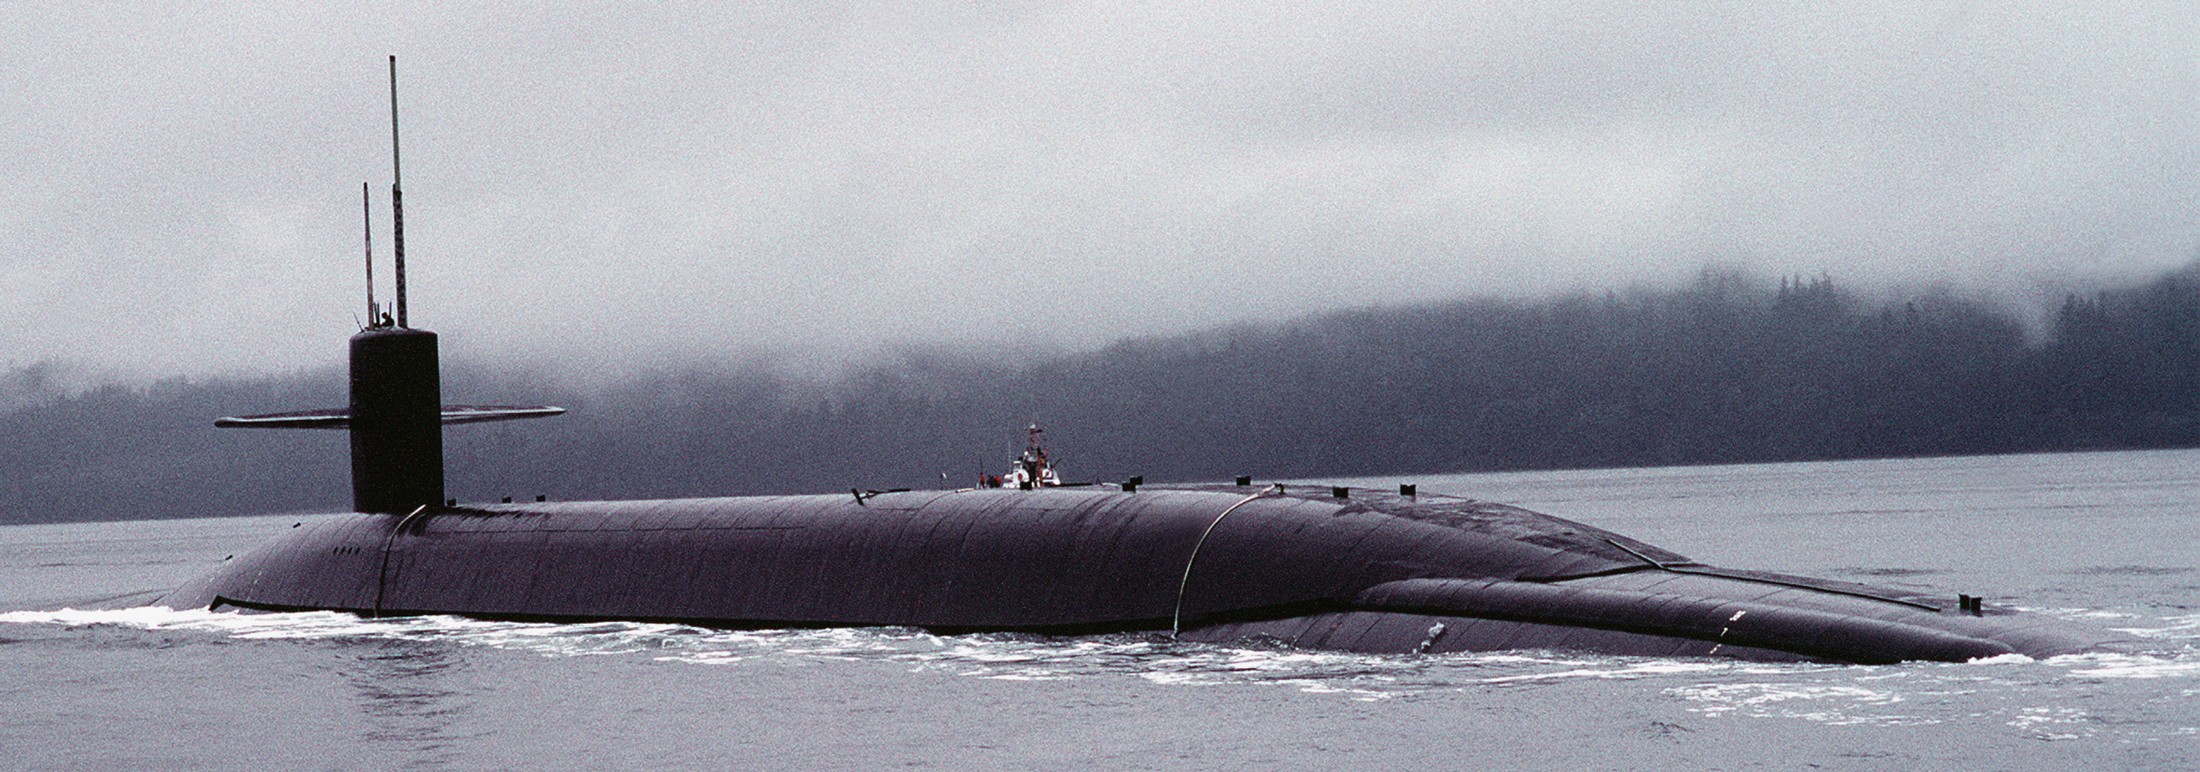 ssbn-726 uss ohio ballistic missile submarine us navy 1982 80